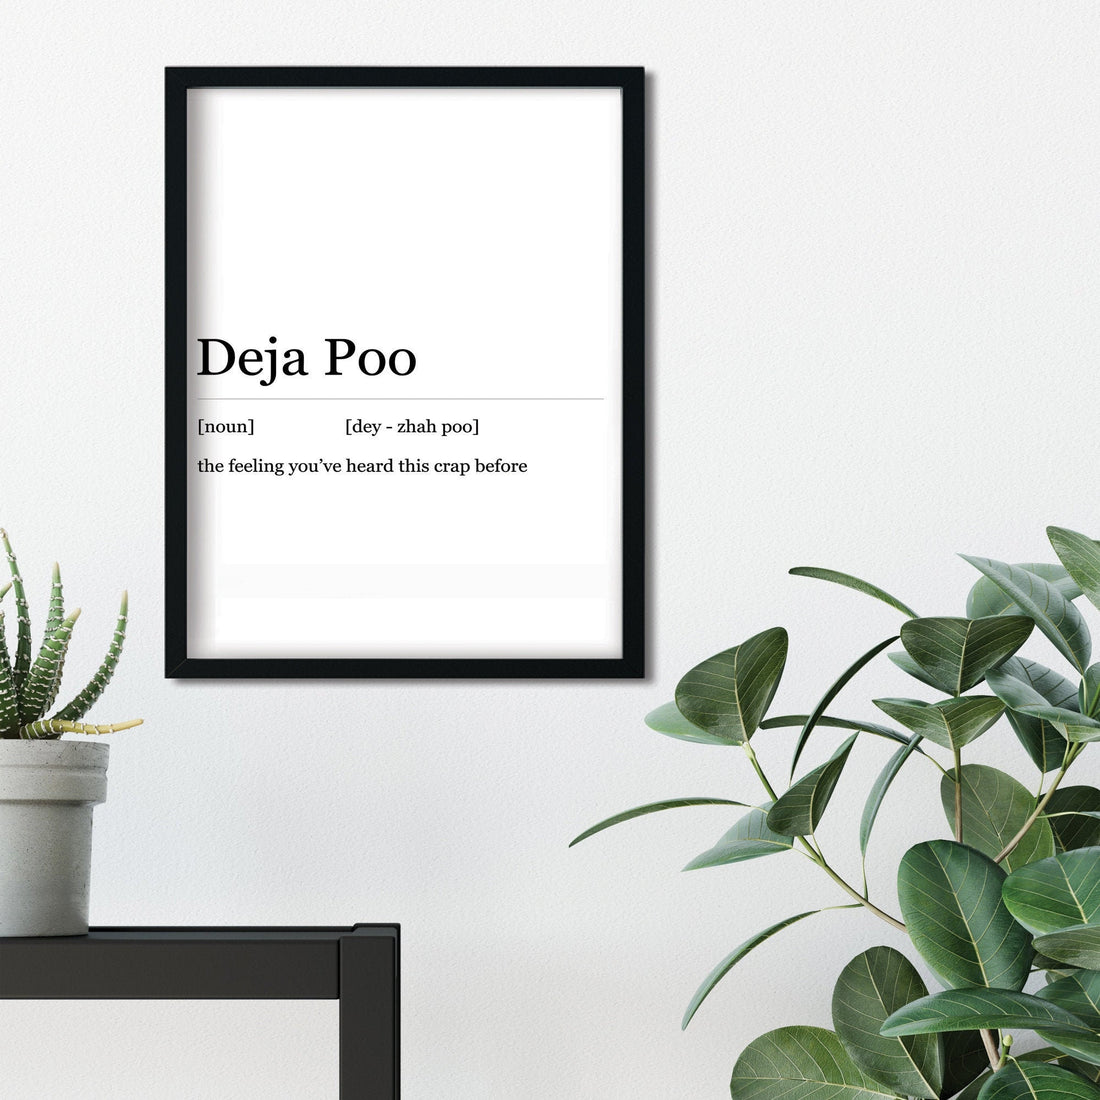 Deja Poo Bathroom Print